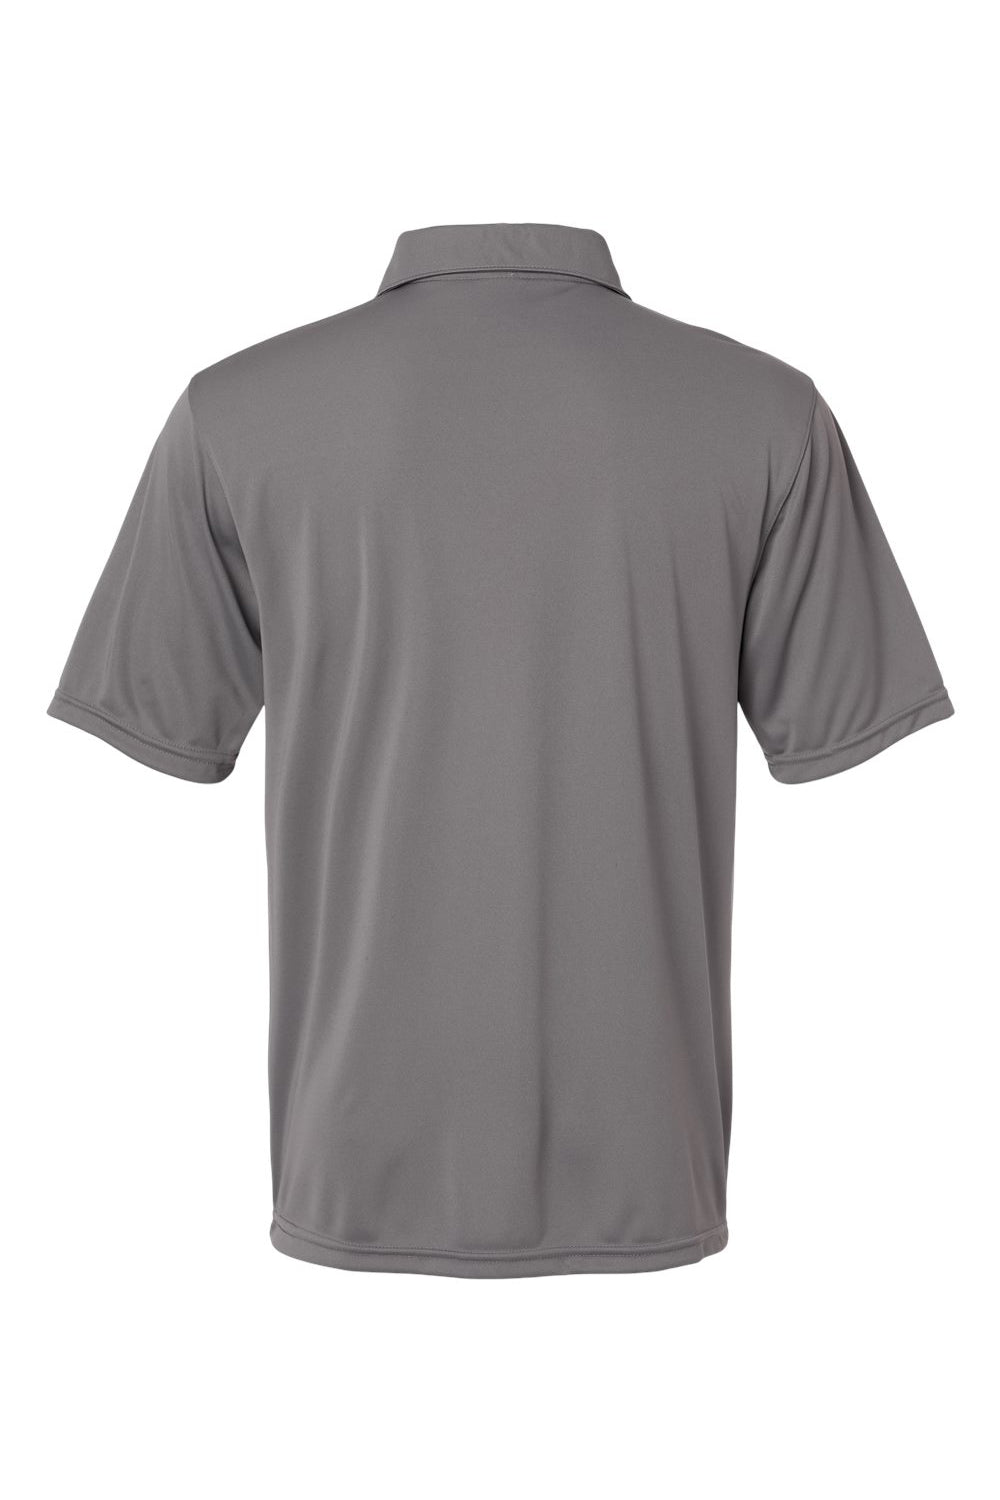 Augusta Sportswear 5017 Mens Vital Moisture Wicking Short Sleeve Polo Shirt Graphite Grey Flat Back